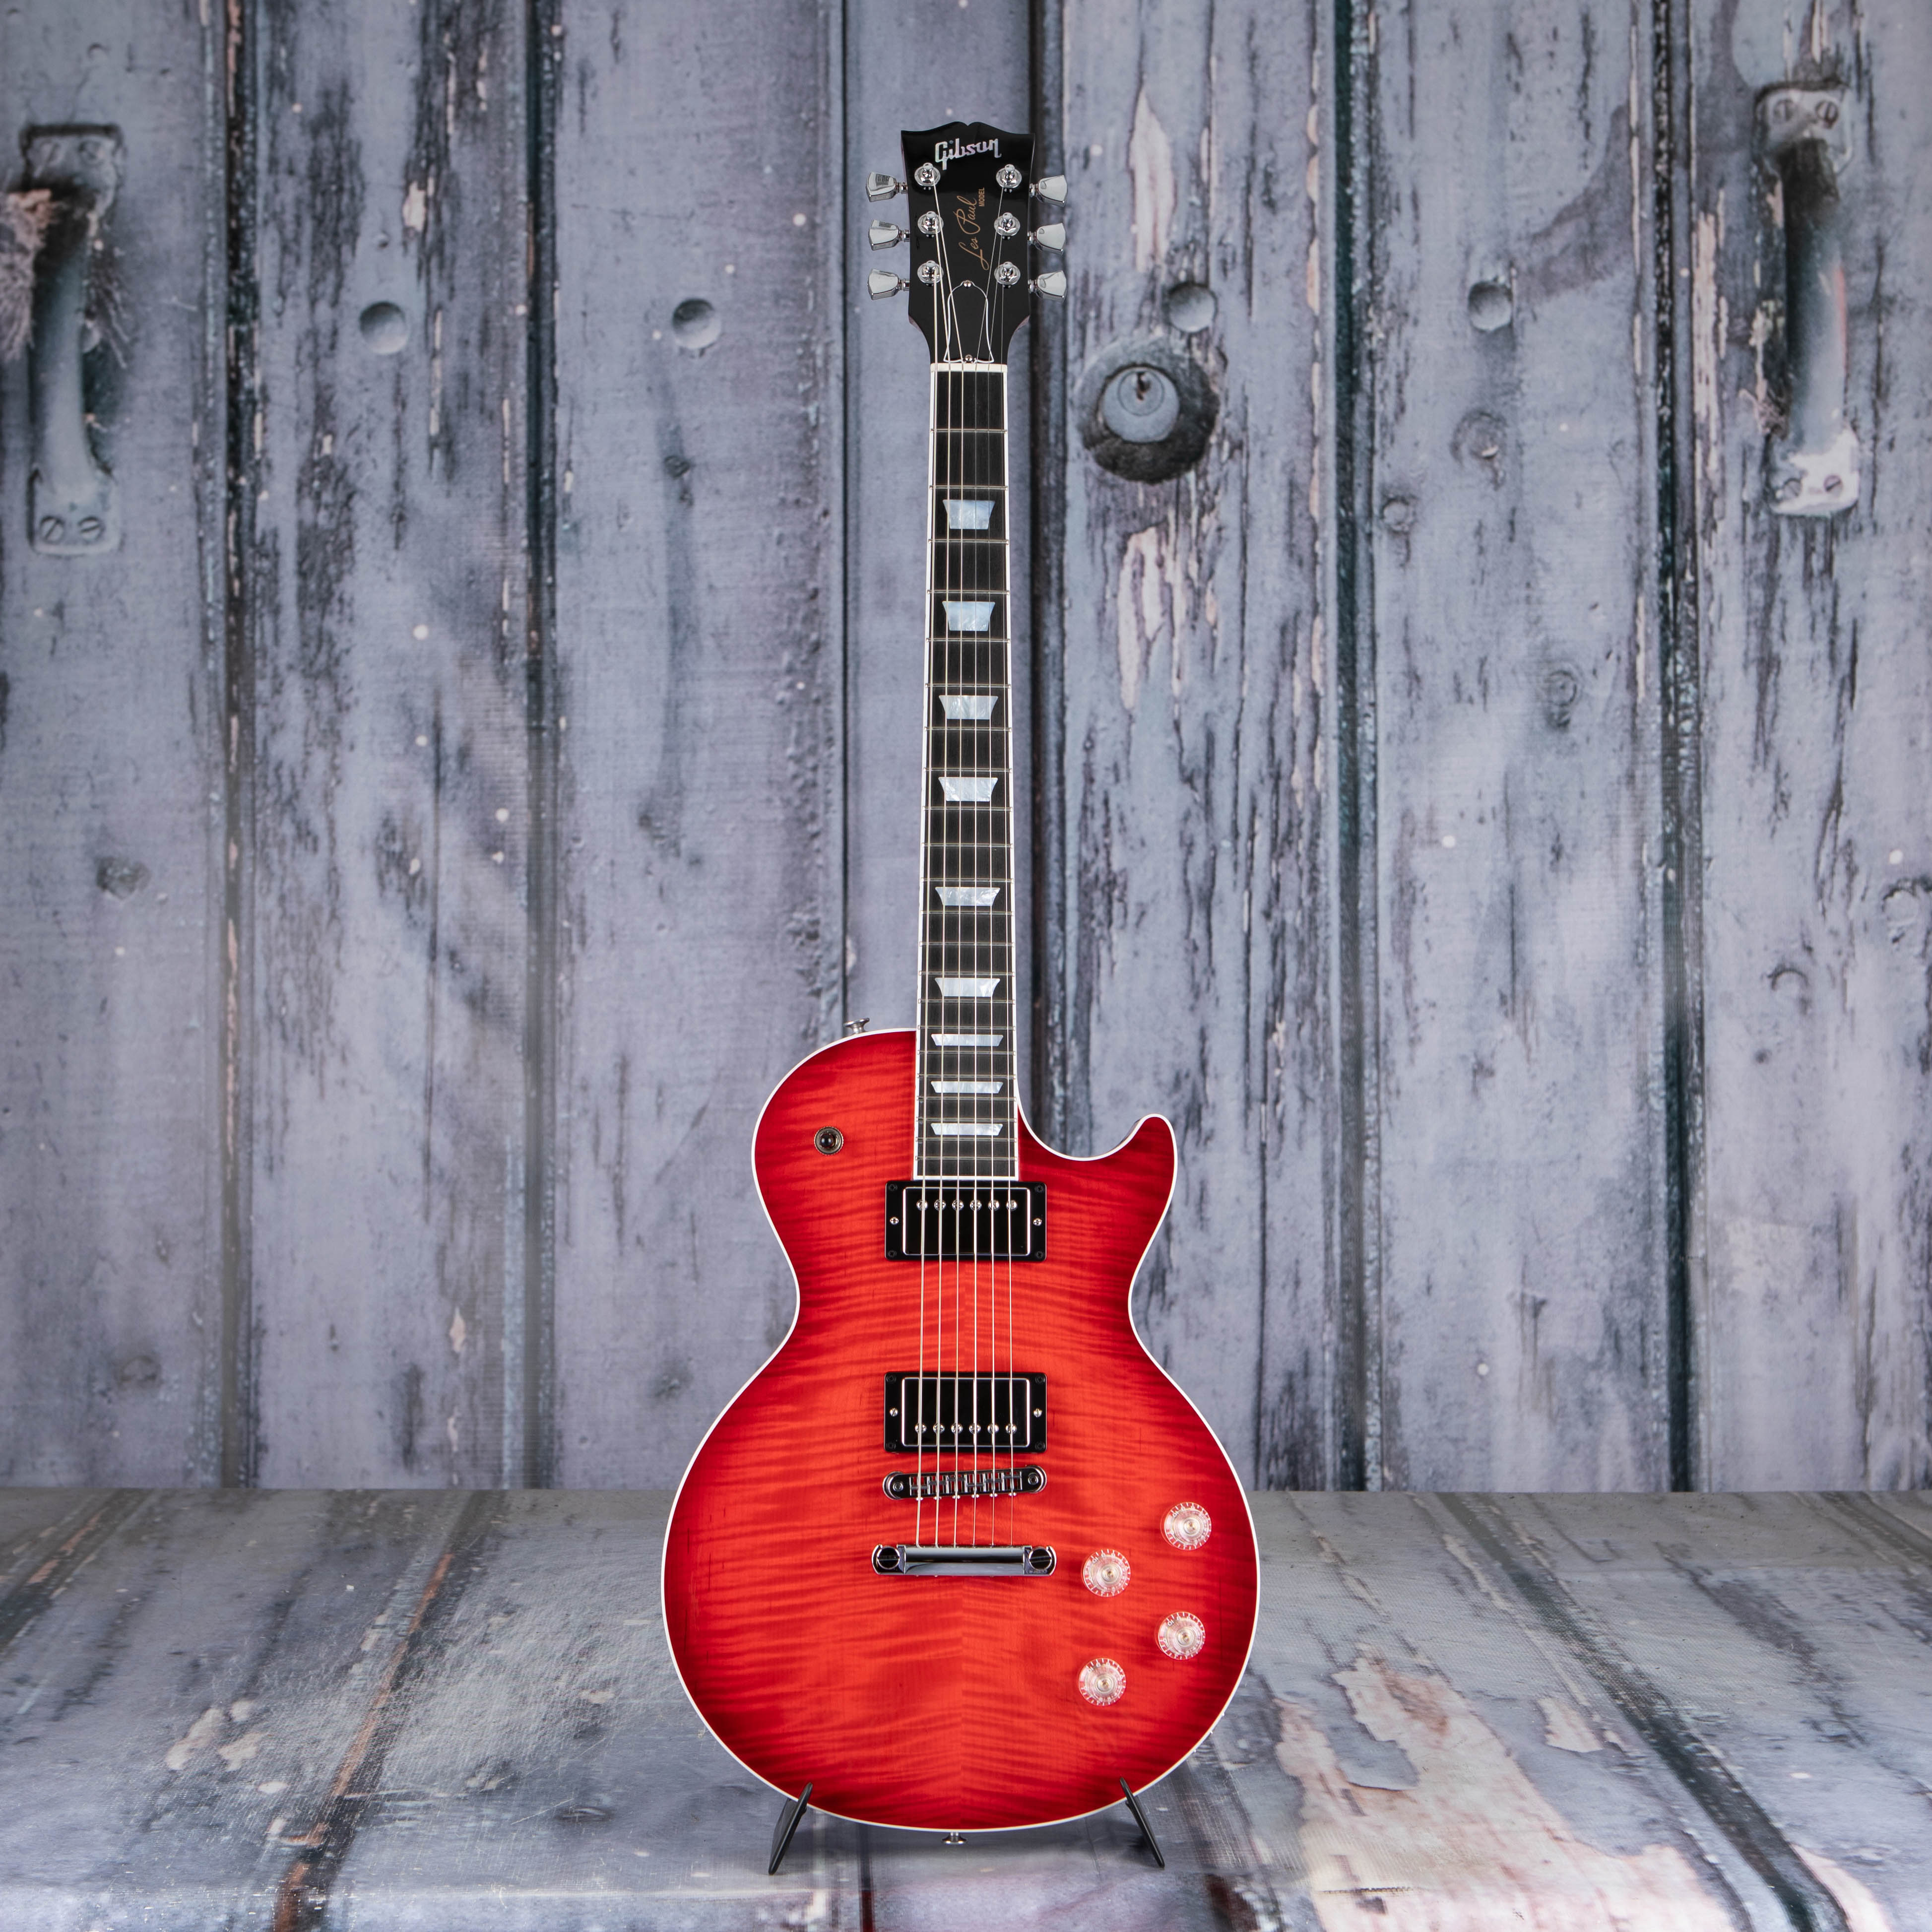 Gibson USA Les Paul Modern Electric Guitar, Figured Cherry Burst, front